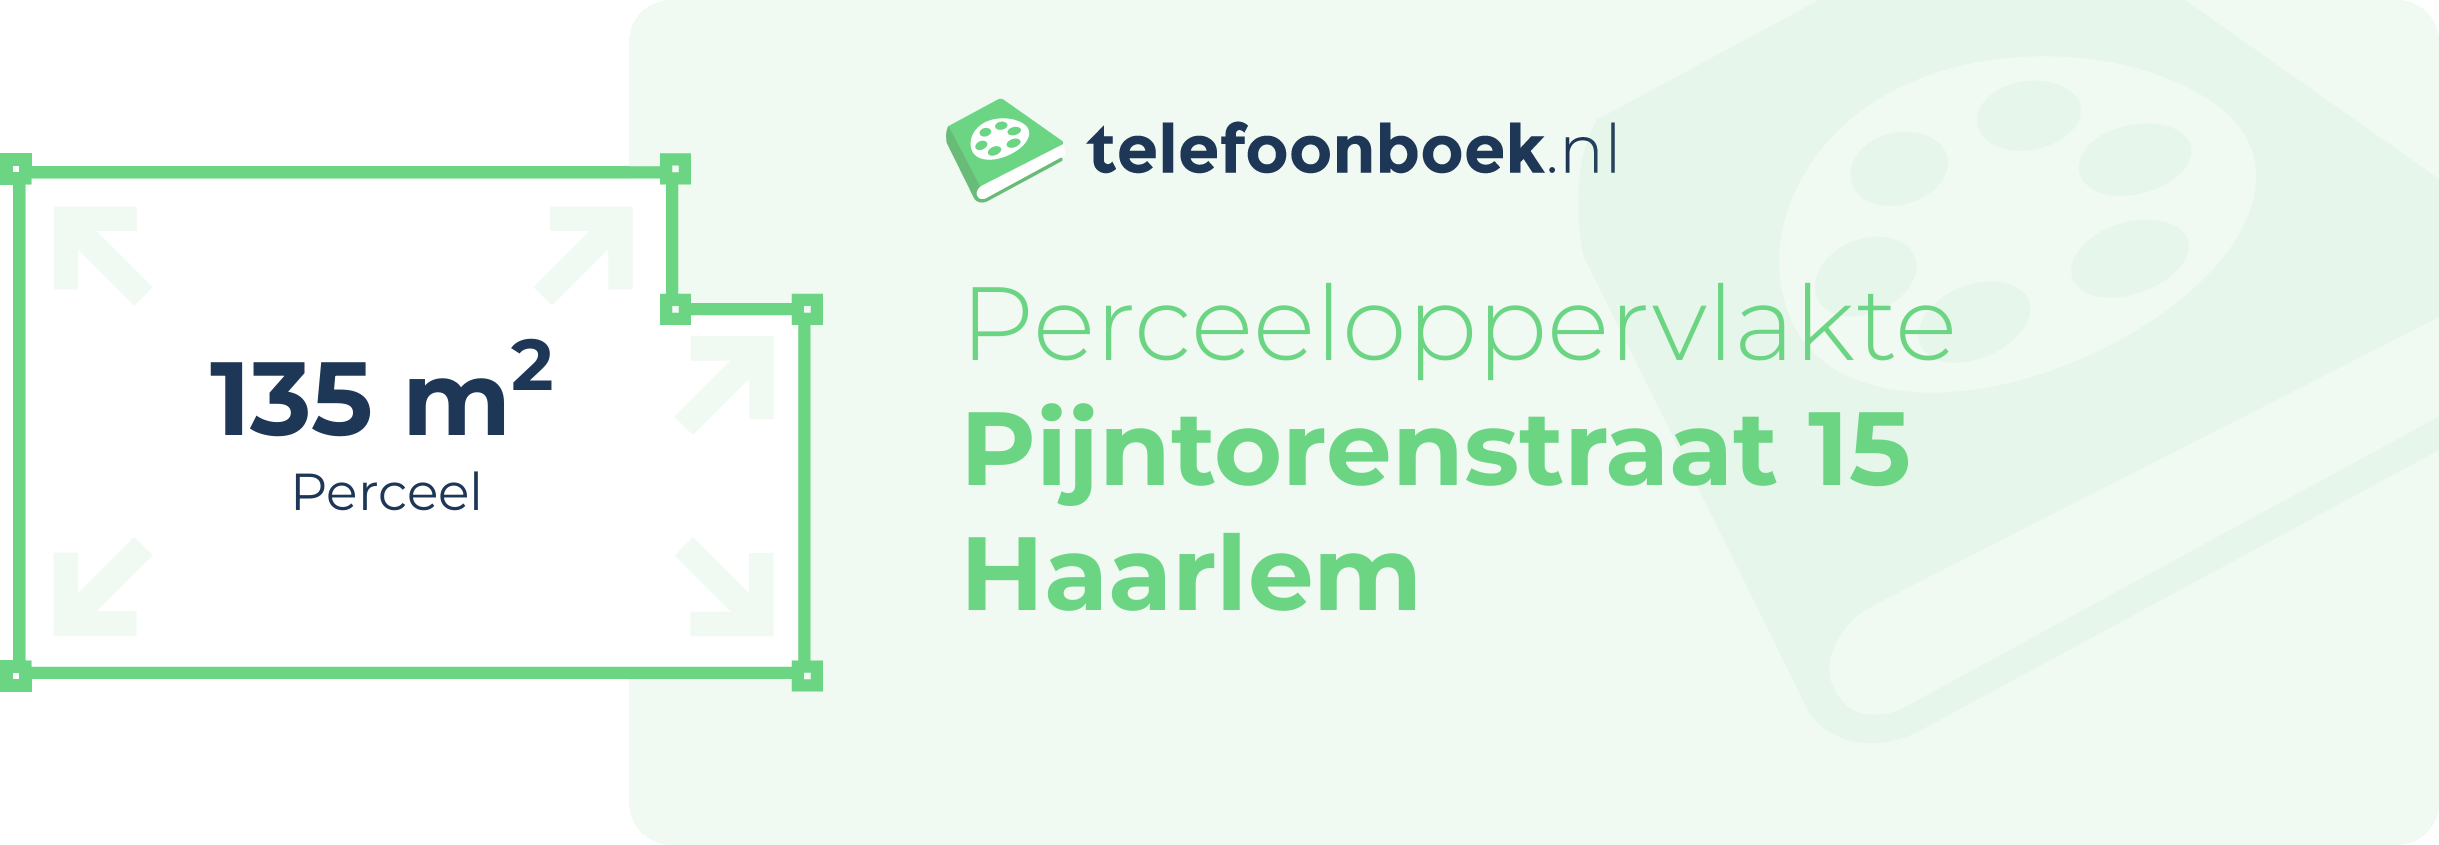 Perceeloppervlakte Pijntorenstraat 15 Haarlem